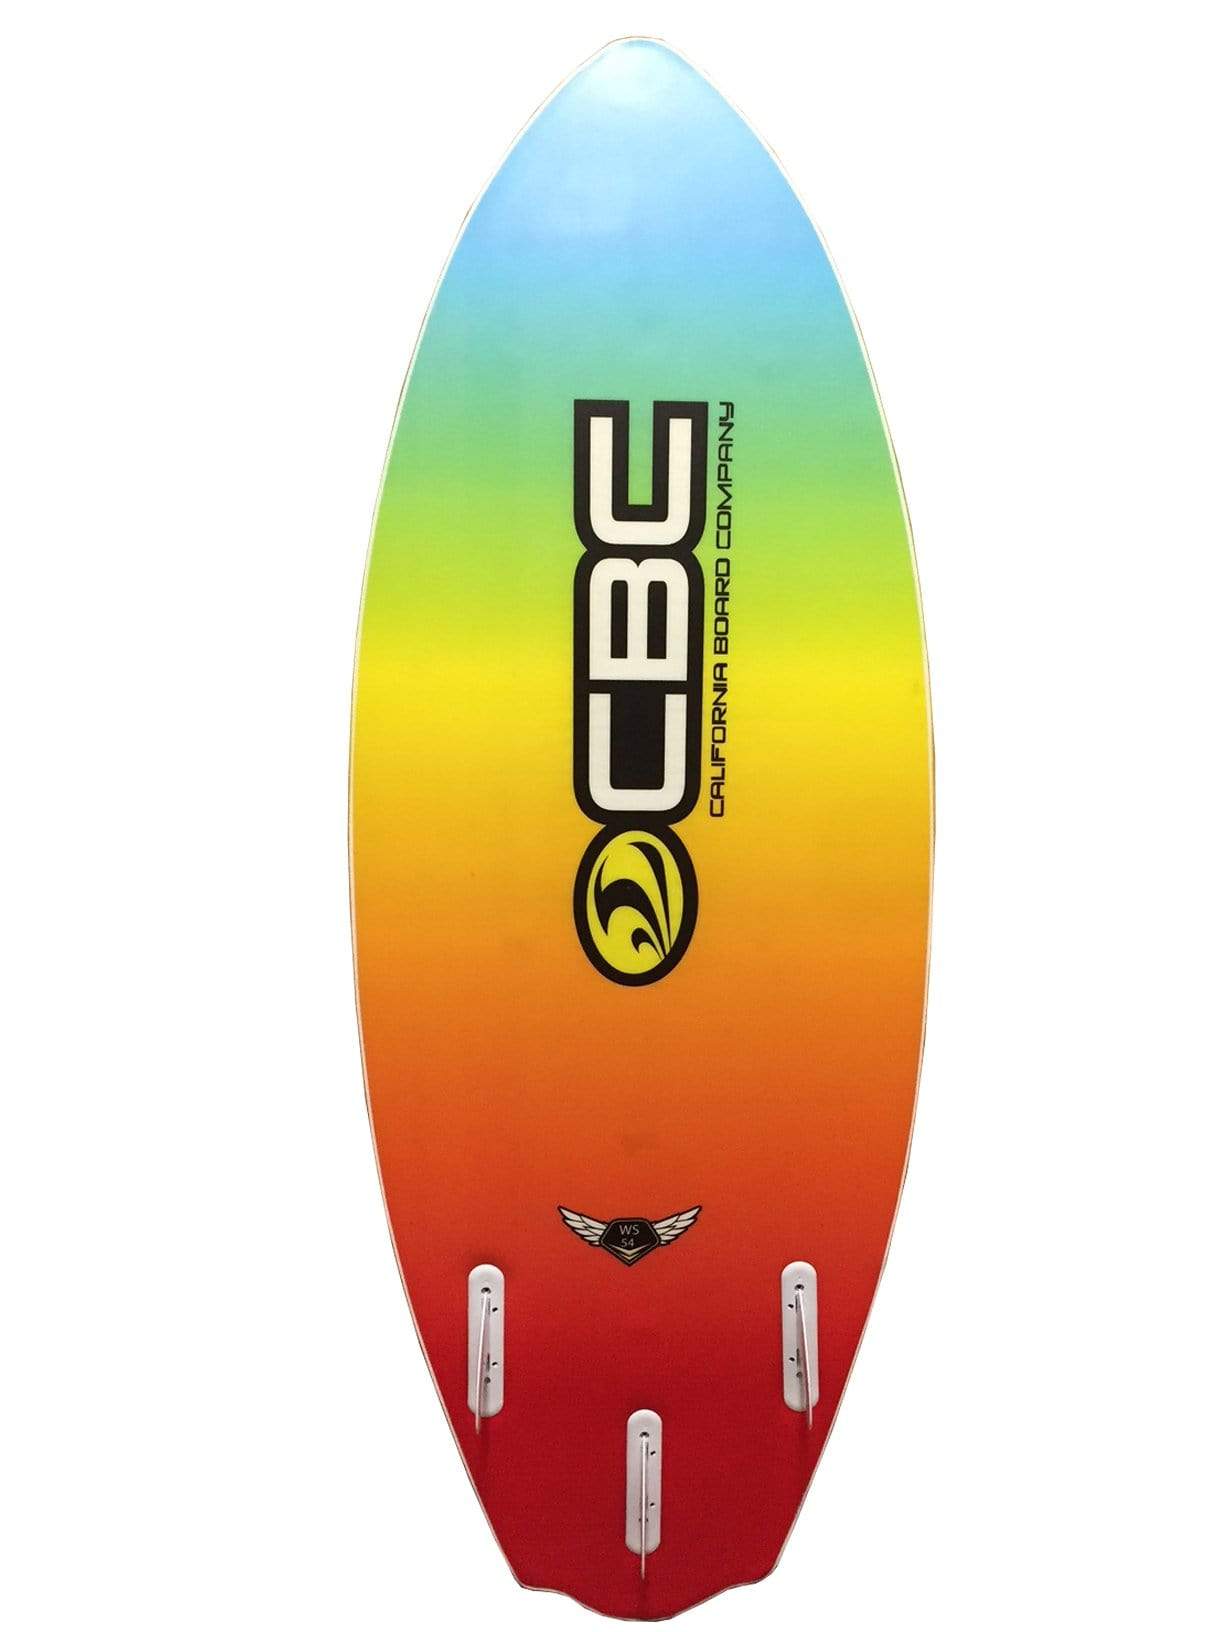 CBC Foam Wake Surfer 54" deck